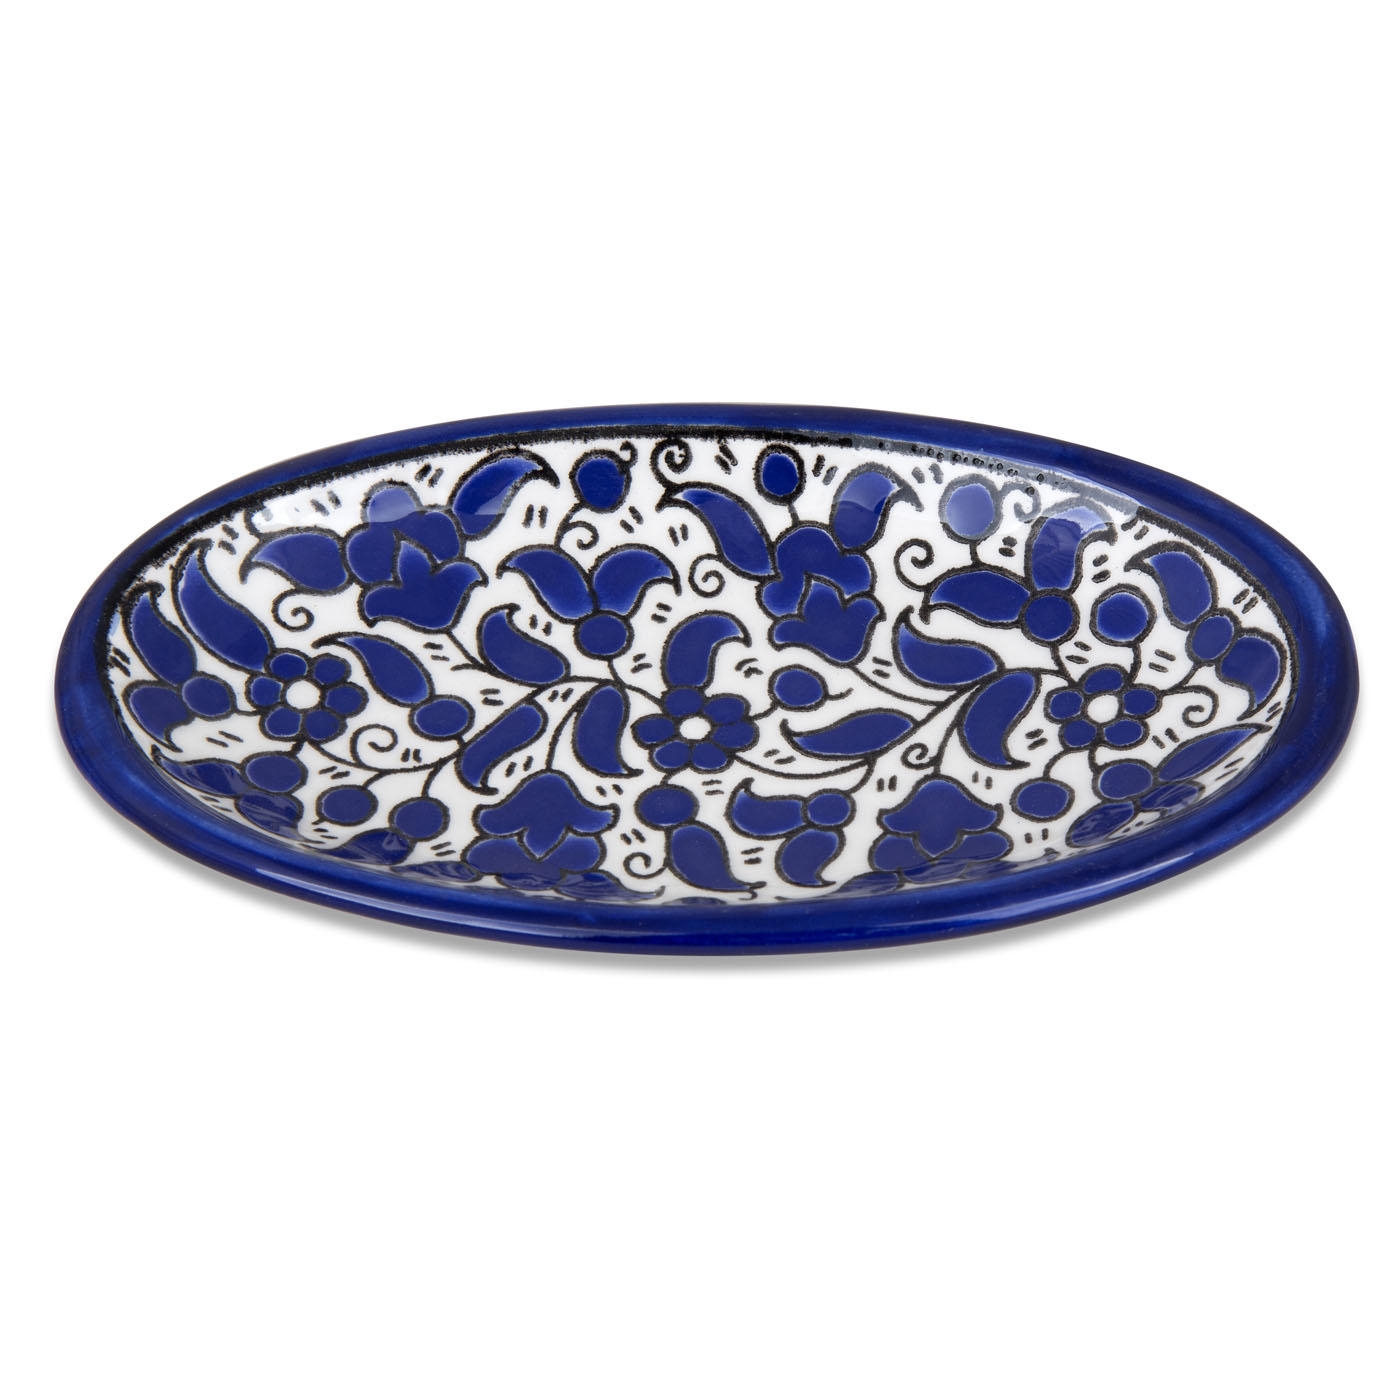 Armenian Ceramics Serving Tray - Blue Flowers - 1